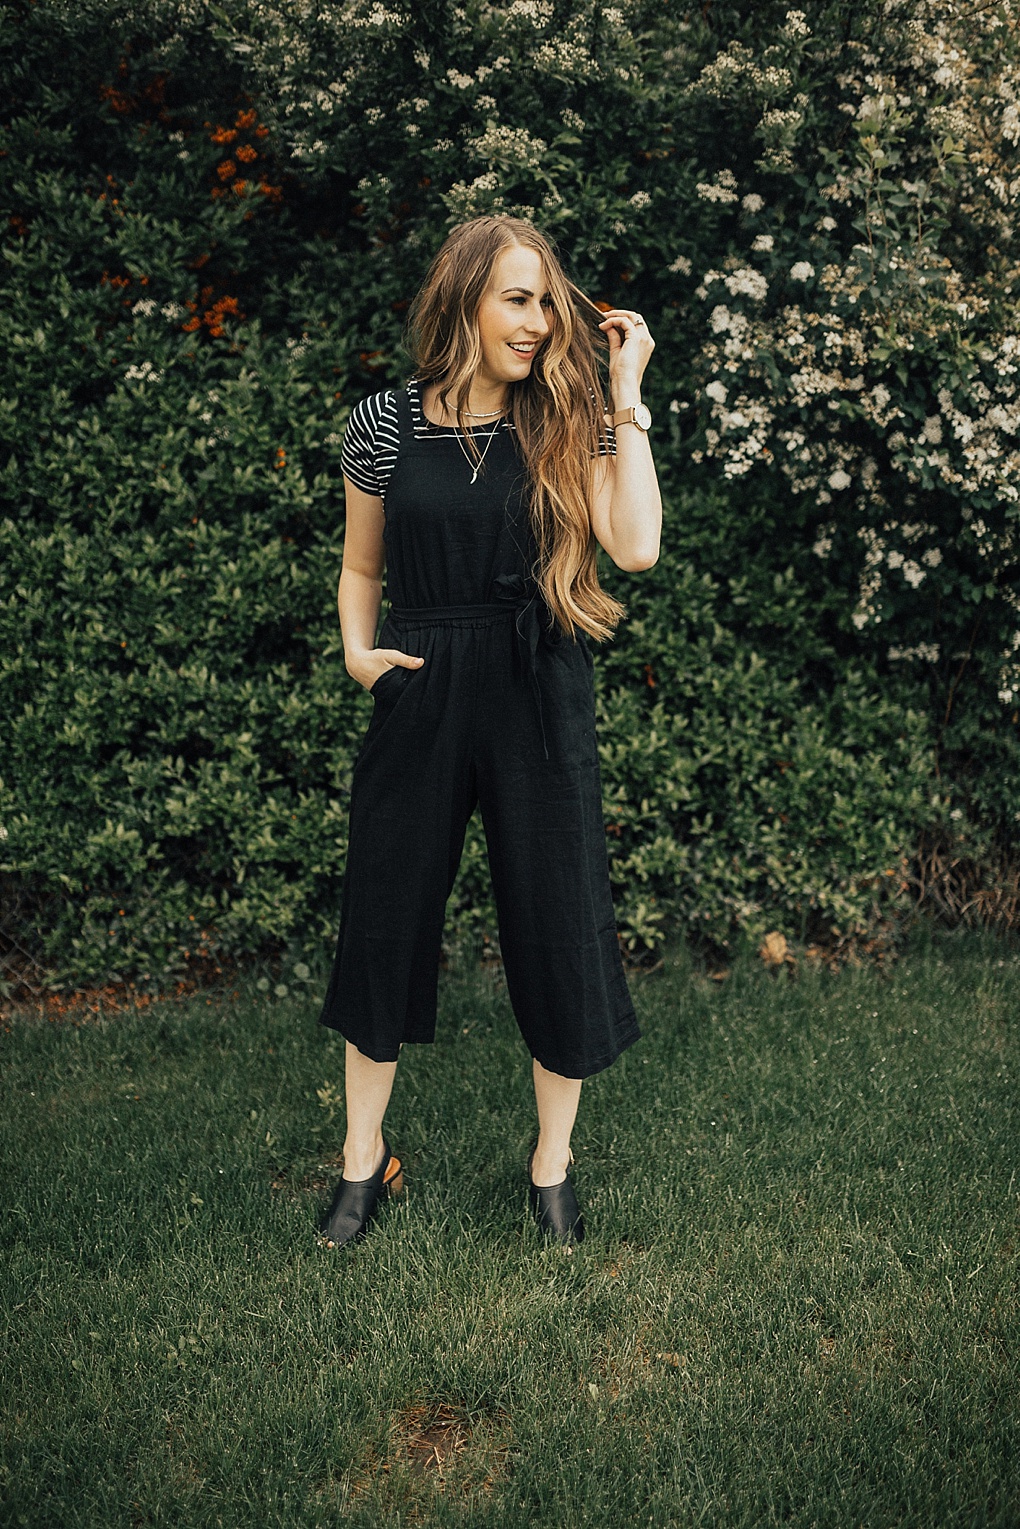 That Jumpsuit Fashion by Utah fashion blogger Dani Marie